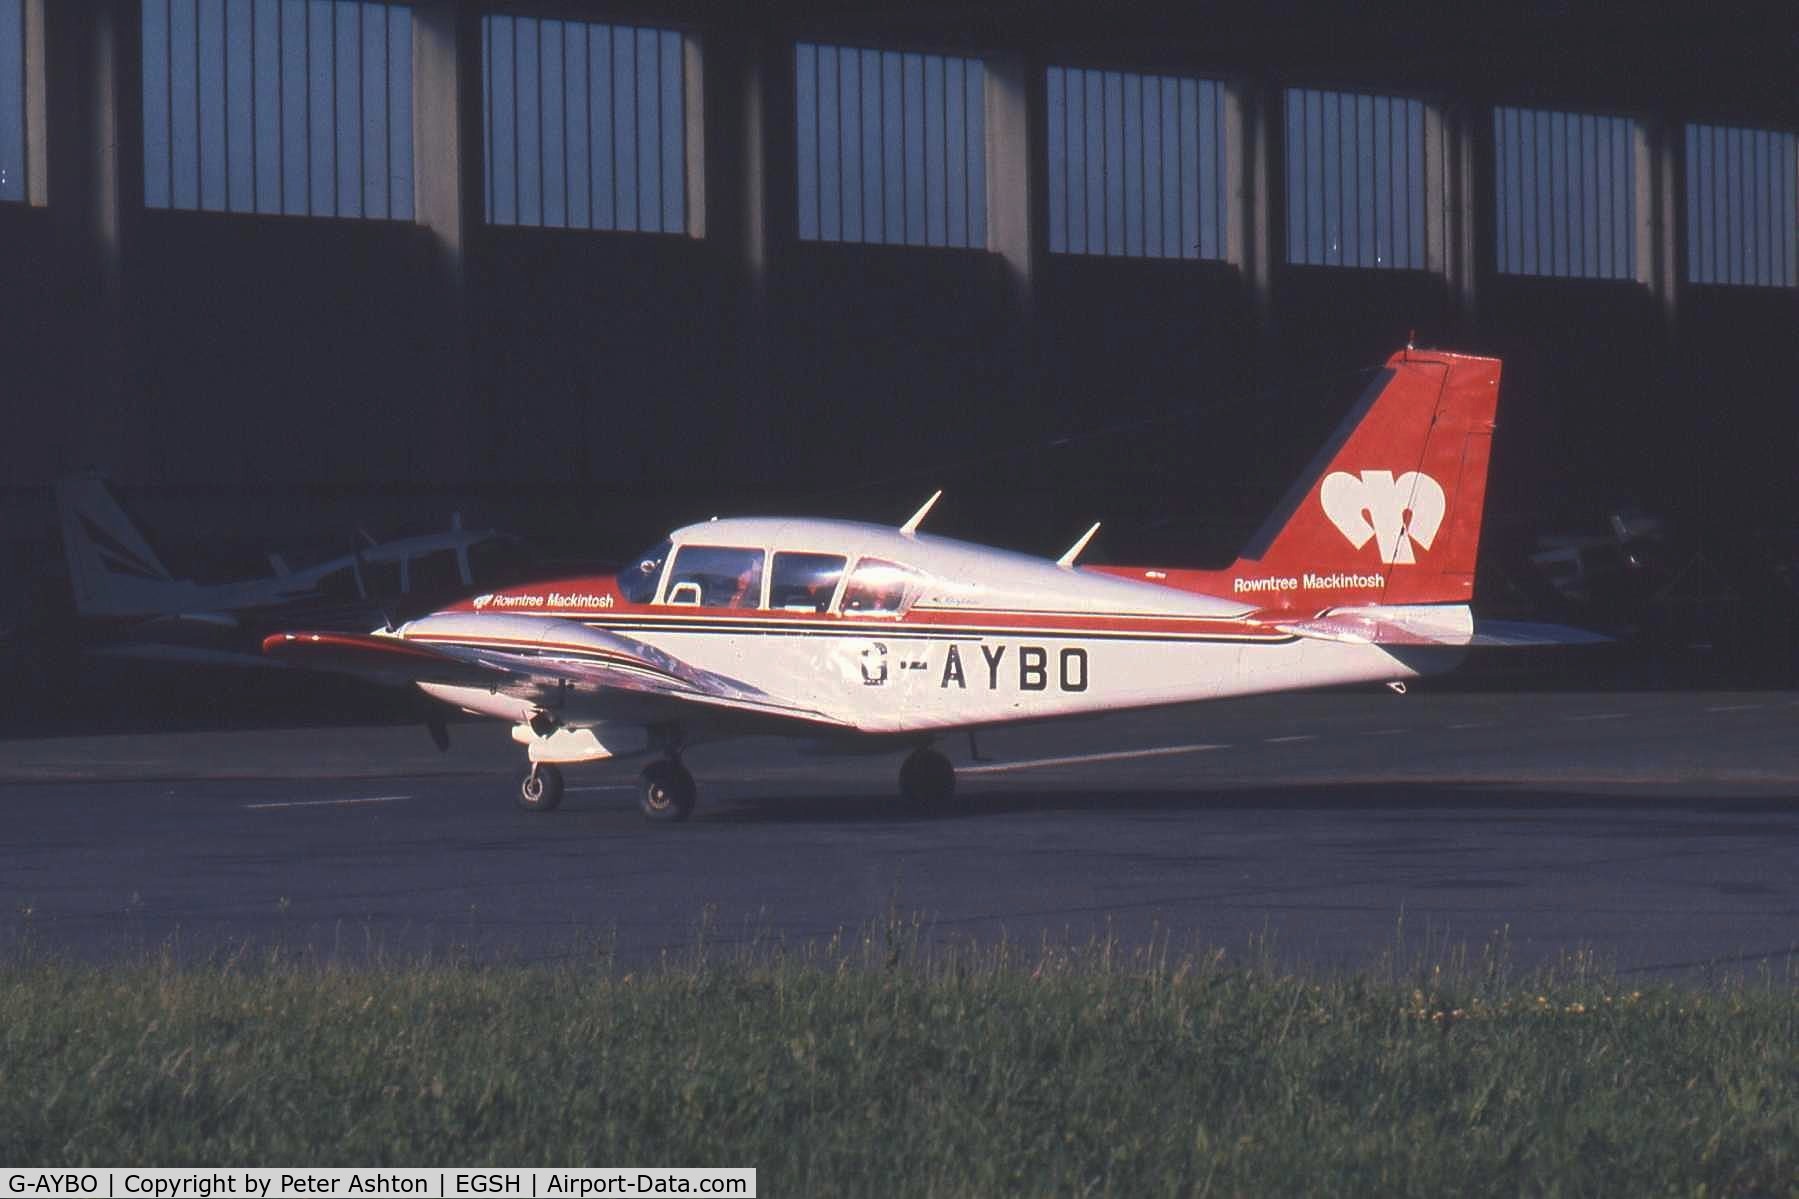 G-AYBO, 1970 Piper PA-23-250 Aztec C/N 27-4510, Rowntree Mackintosh